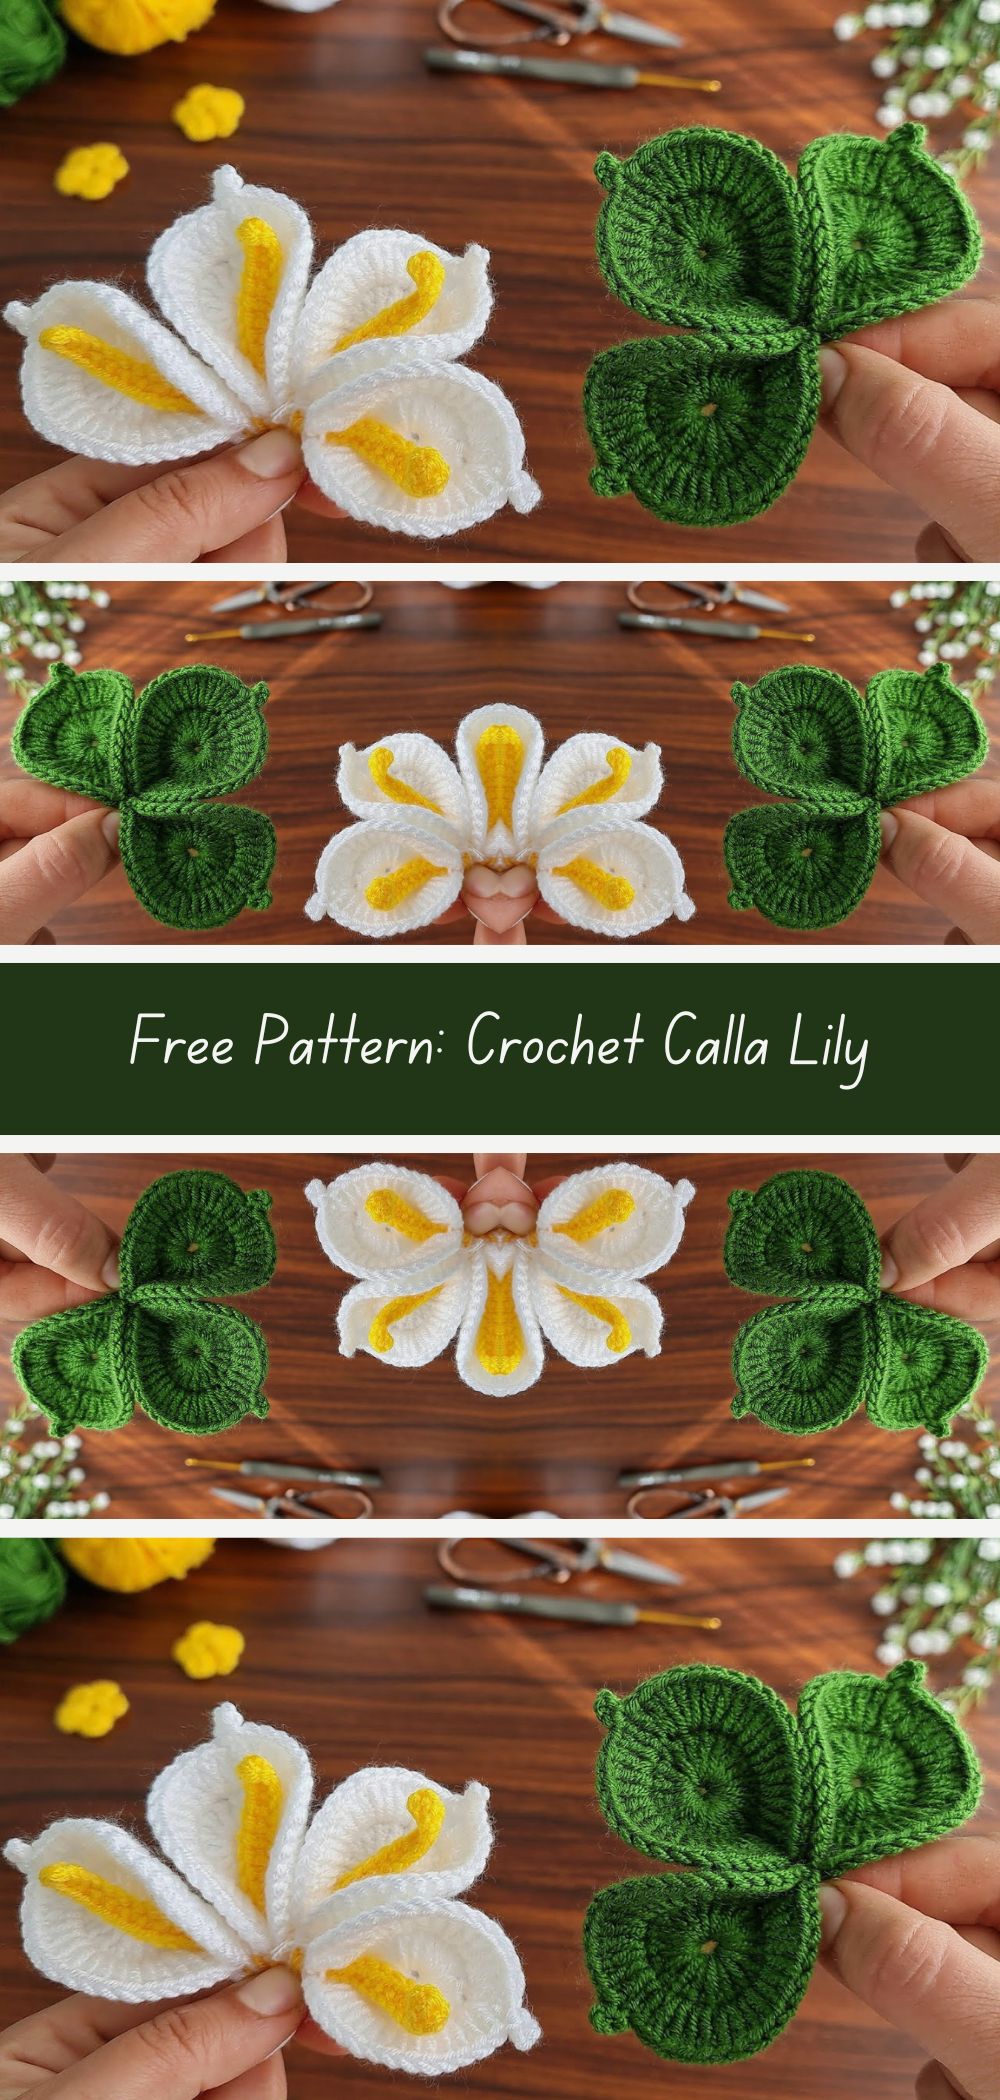 Free Pattern: Crochet Calla Lily - Create stunning crochet calla lilies with this free pattern